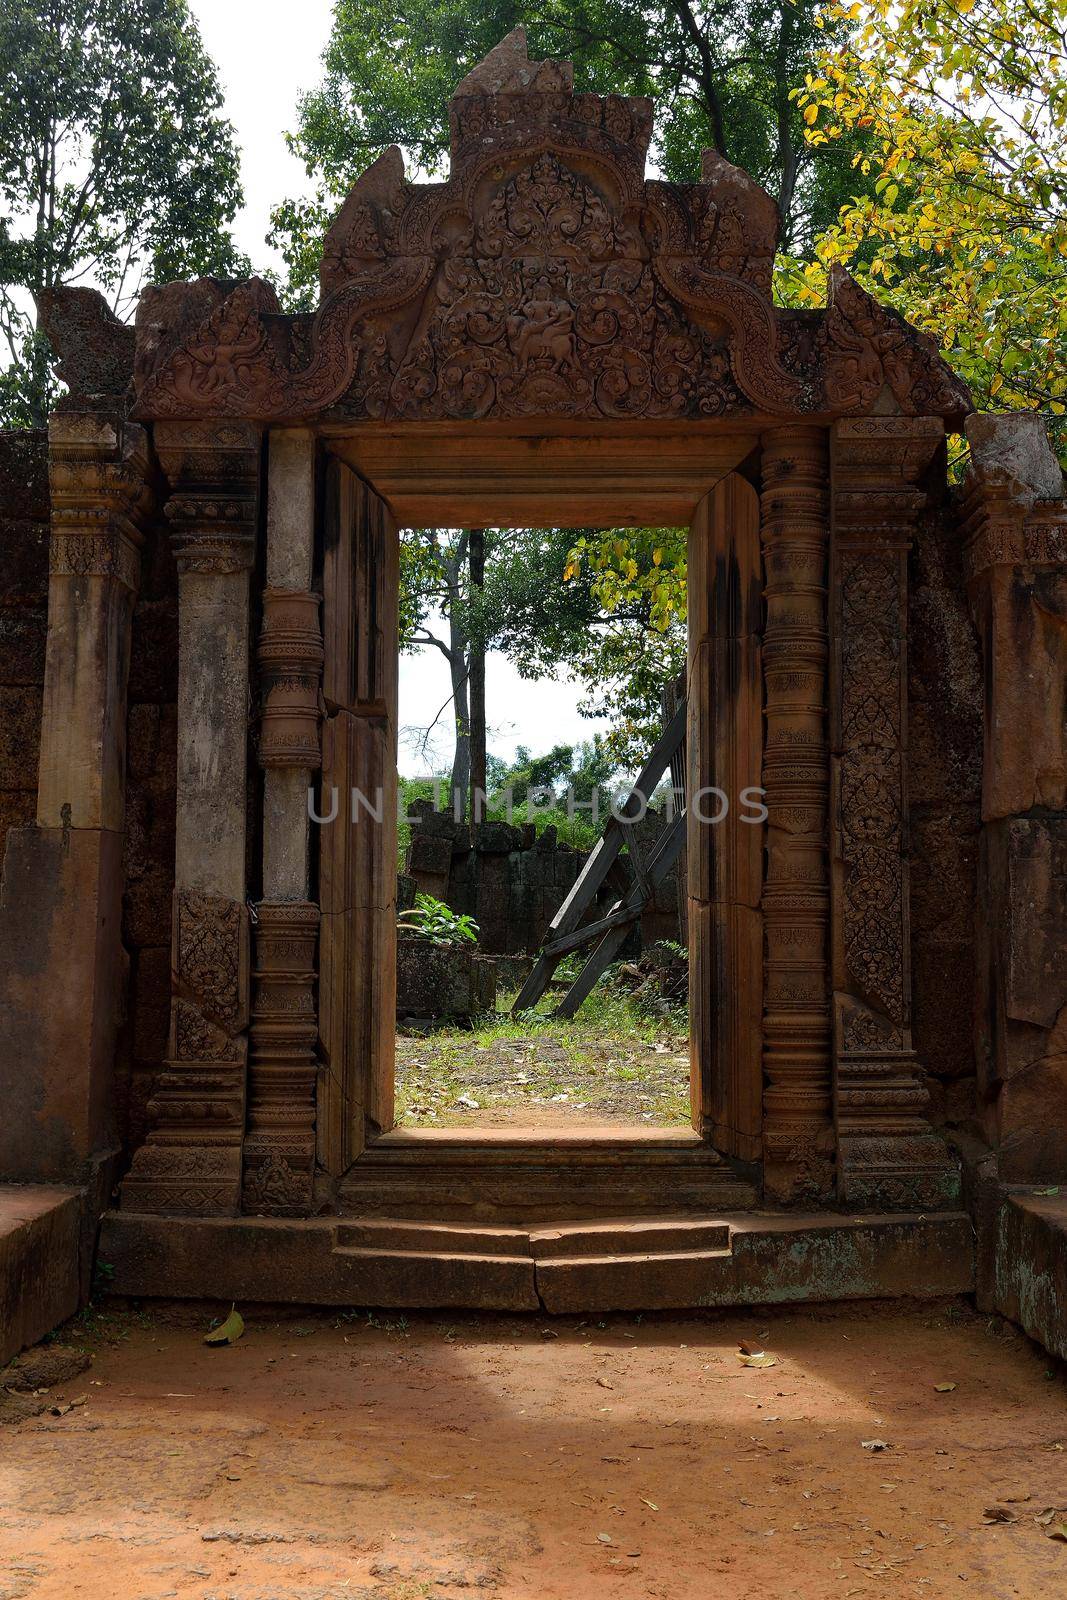 Temple in the Angkor complex, Cambodia.